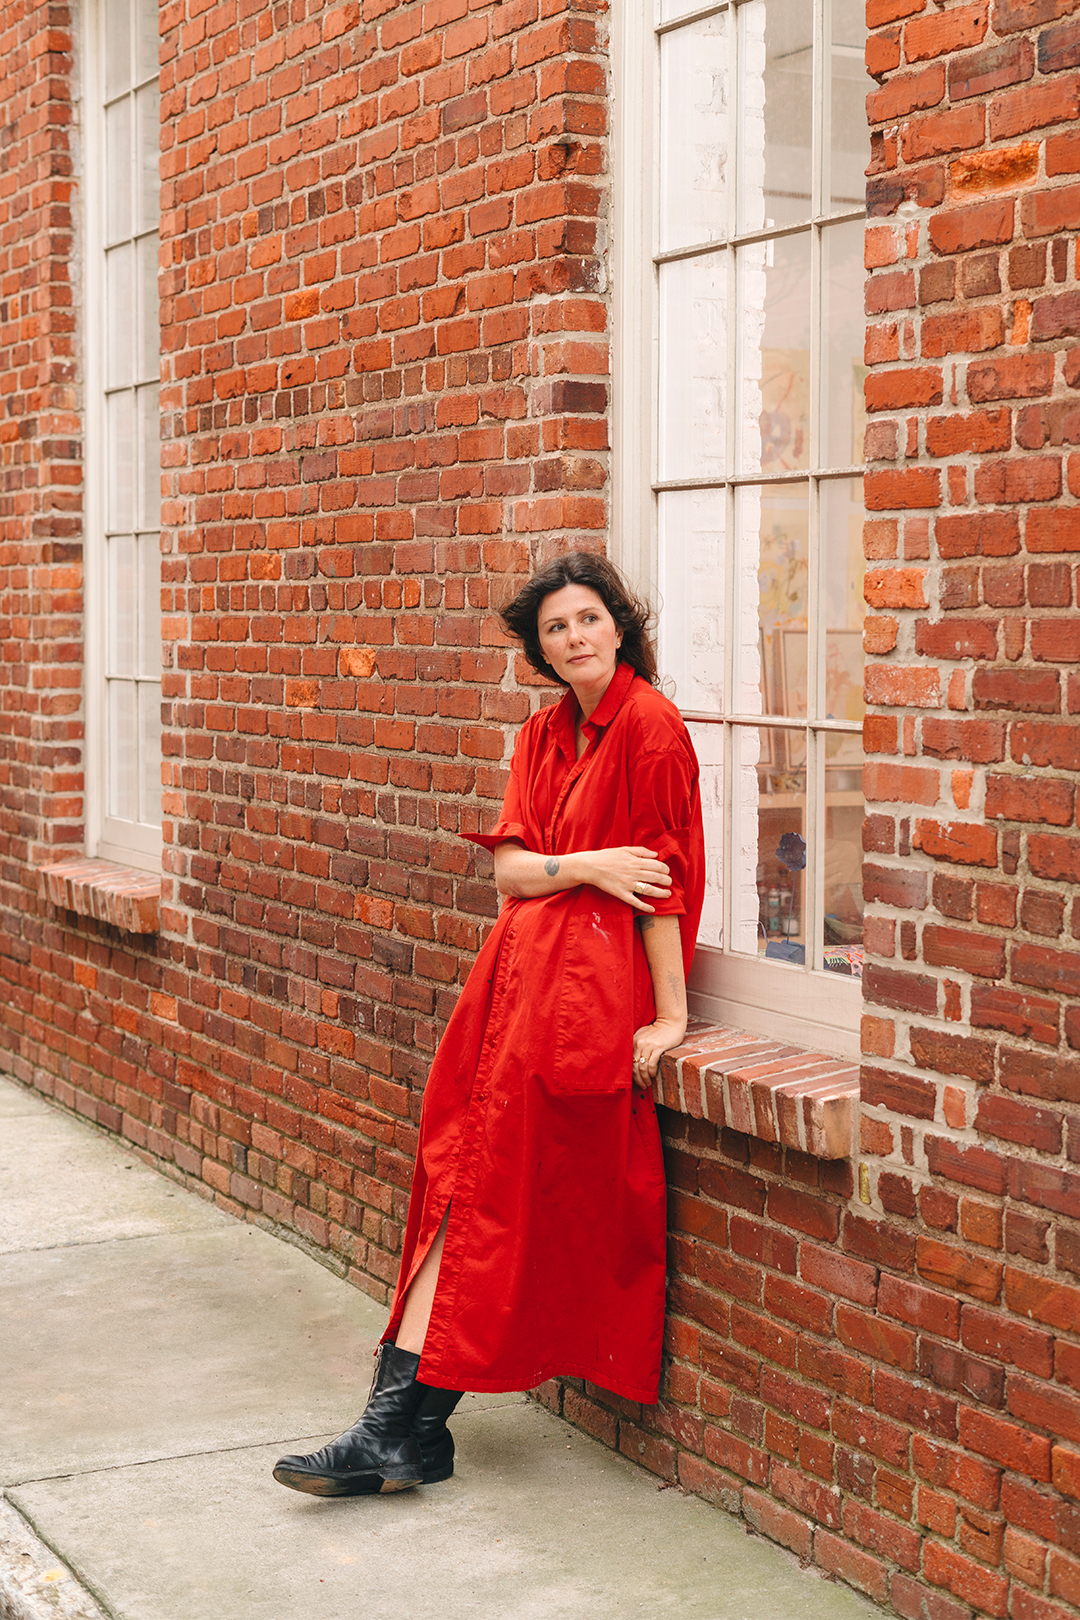 artist in red dress against brick exterior